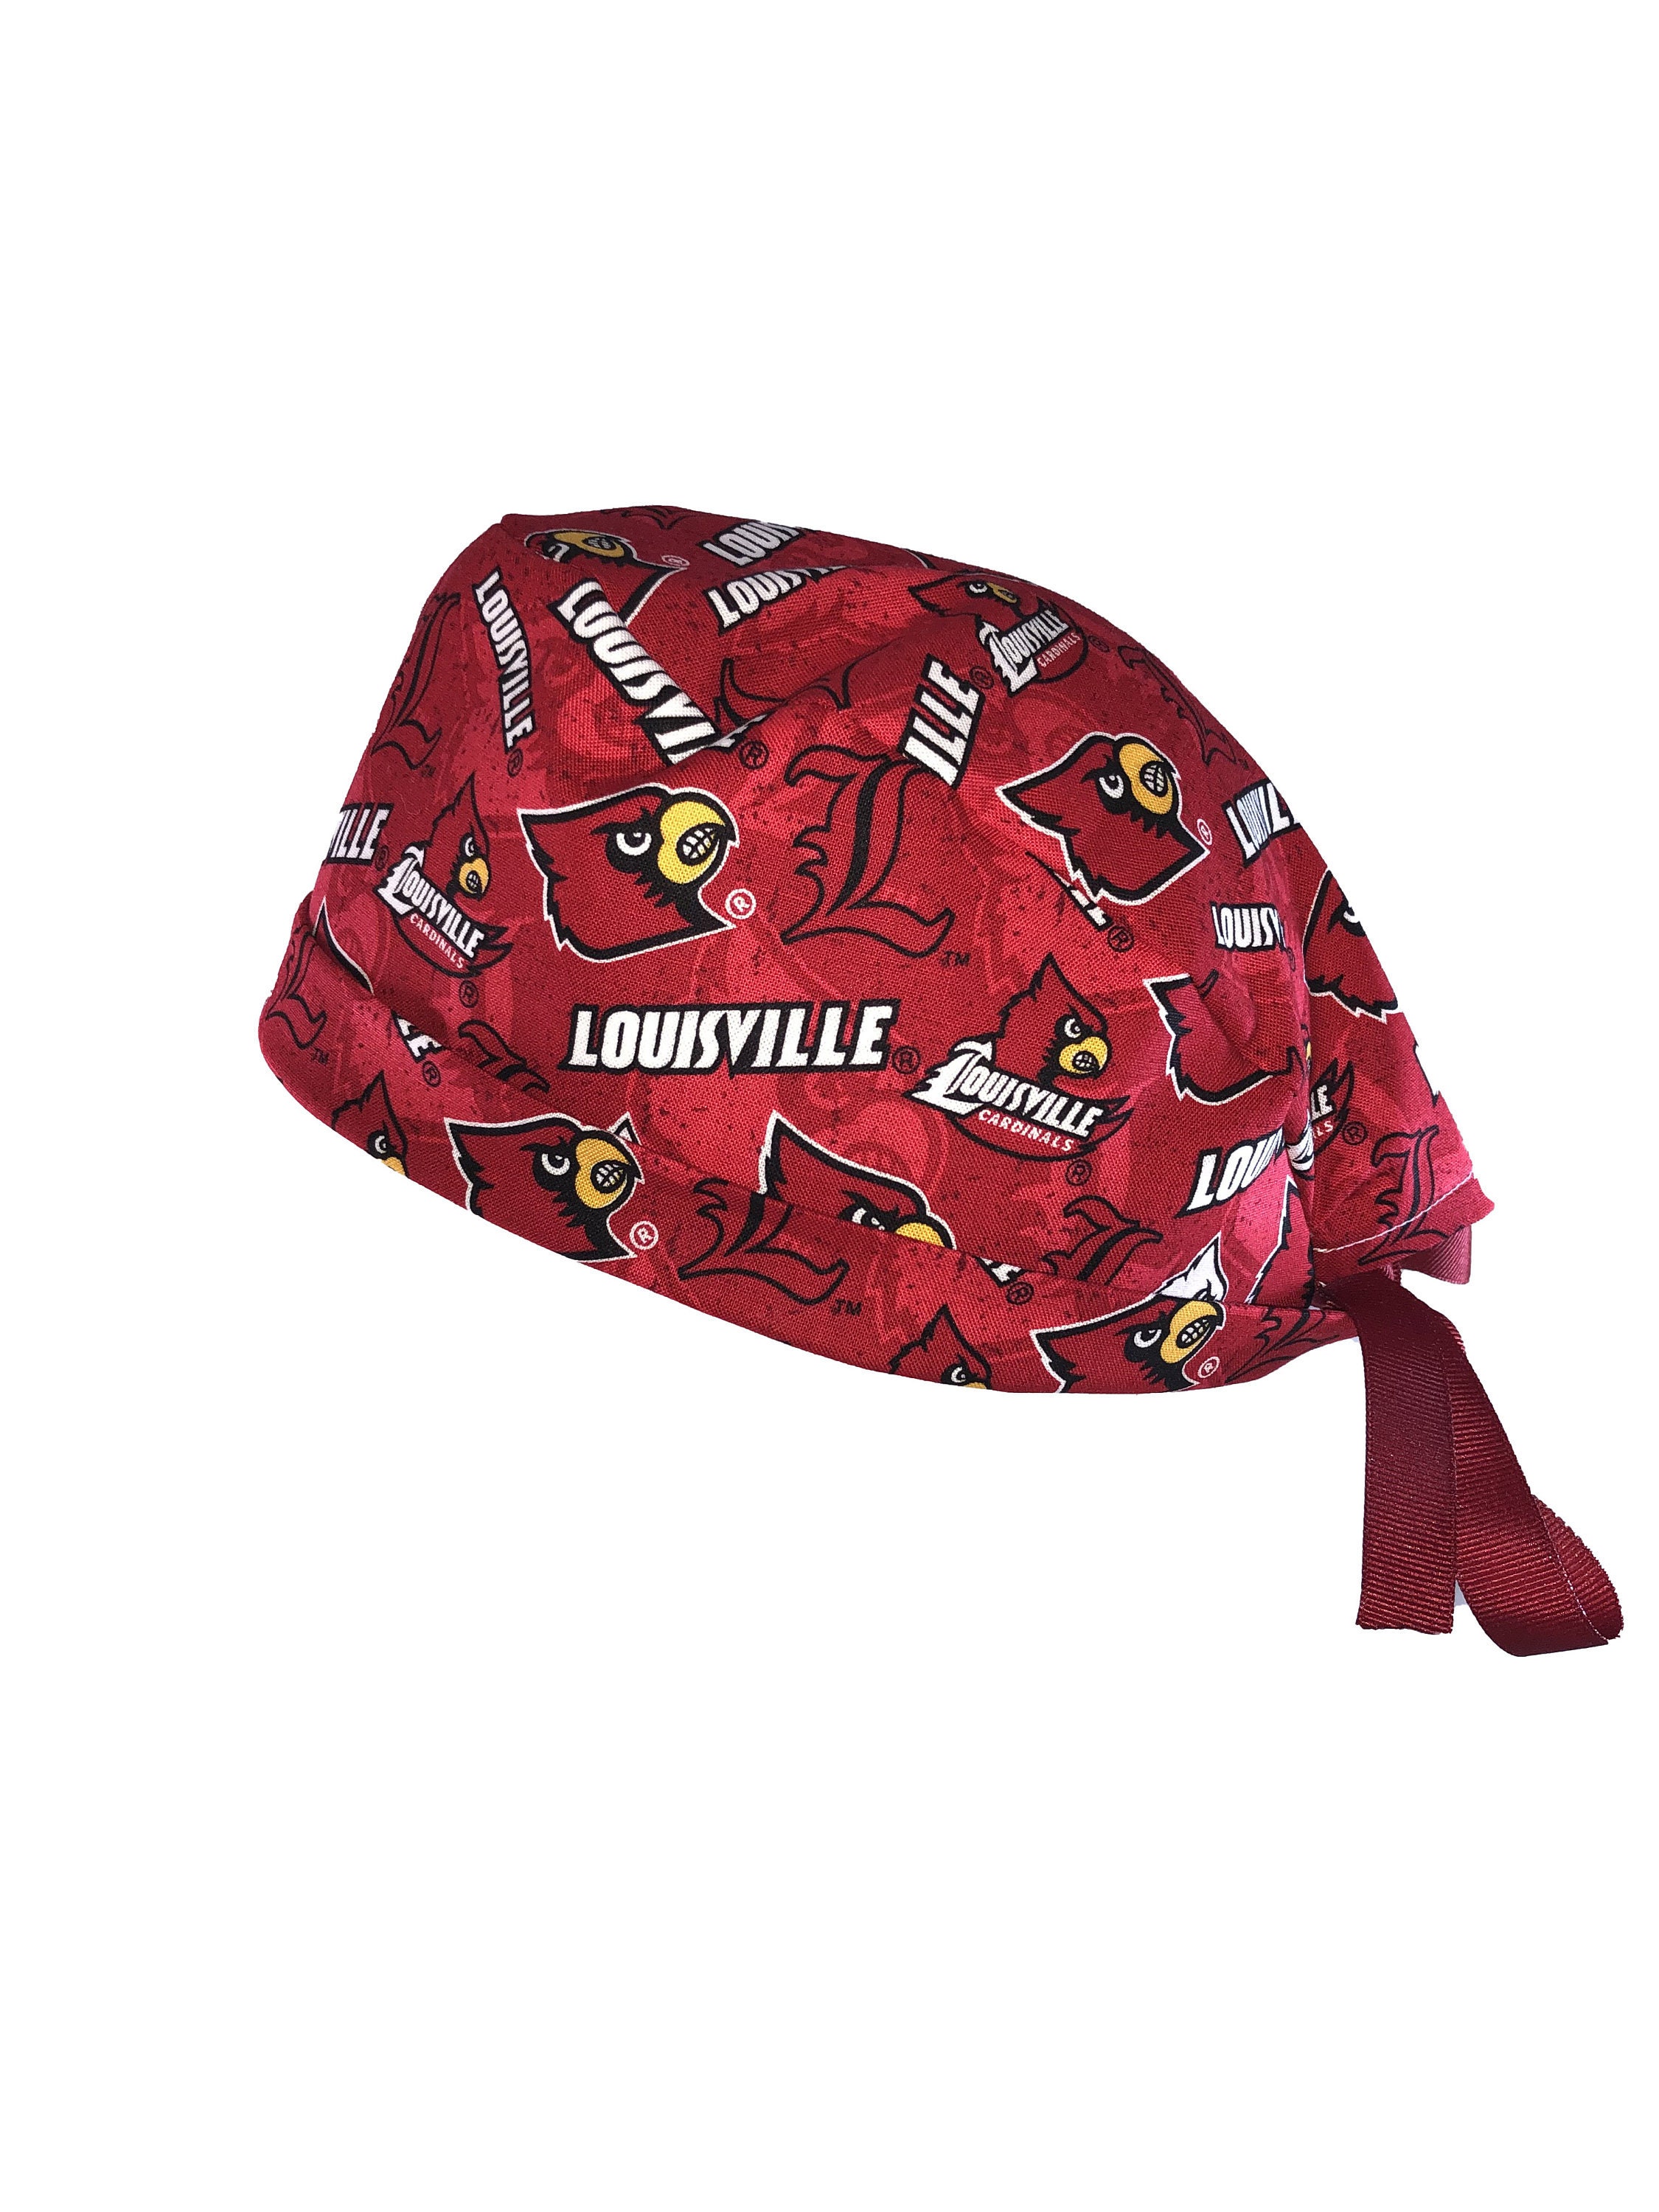 Louisville Cardinals University Mens White Red Bucket hat sz. Large/XL New  Ncaa